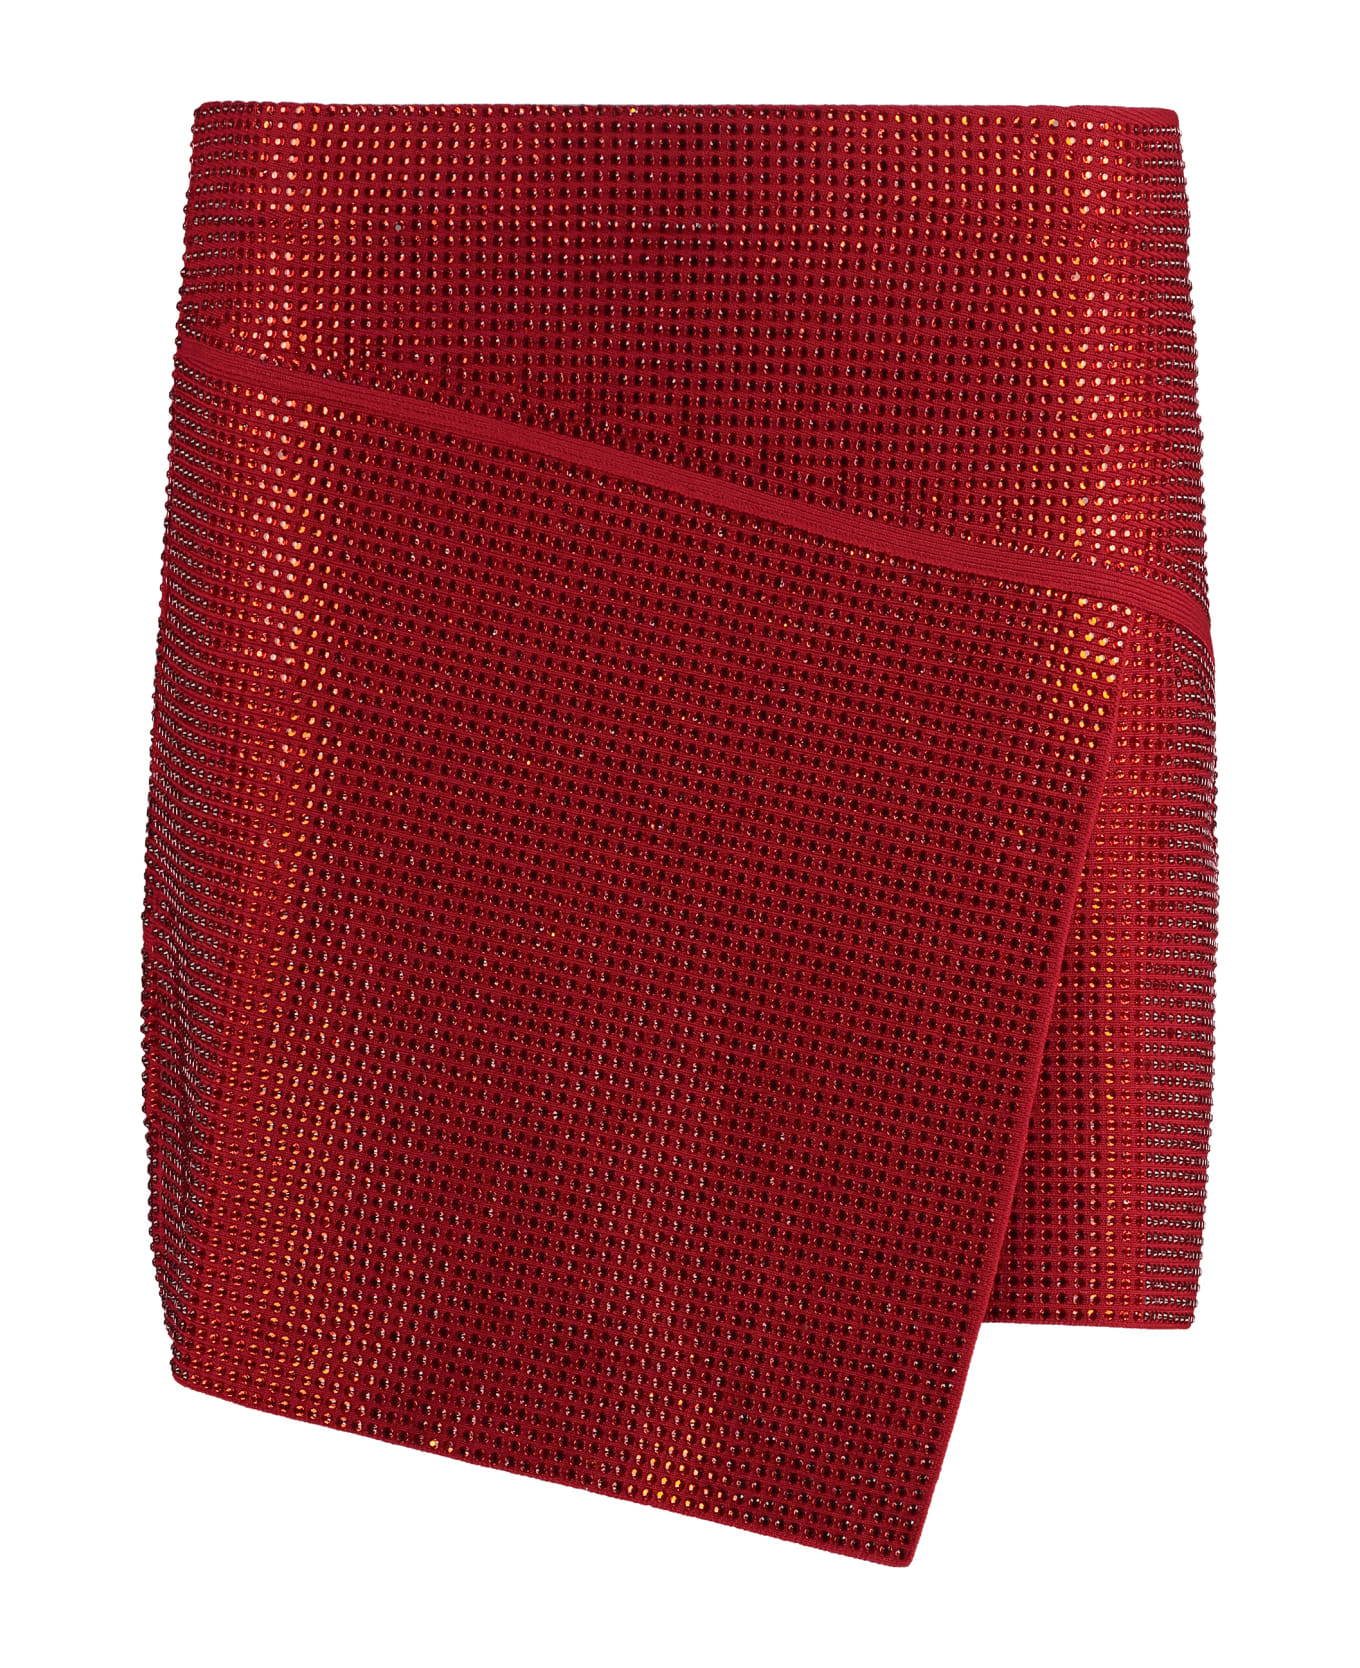 ANDREĀDAMO Asymmetric Miniskirt - red